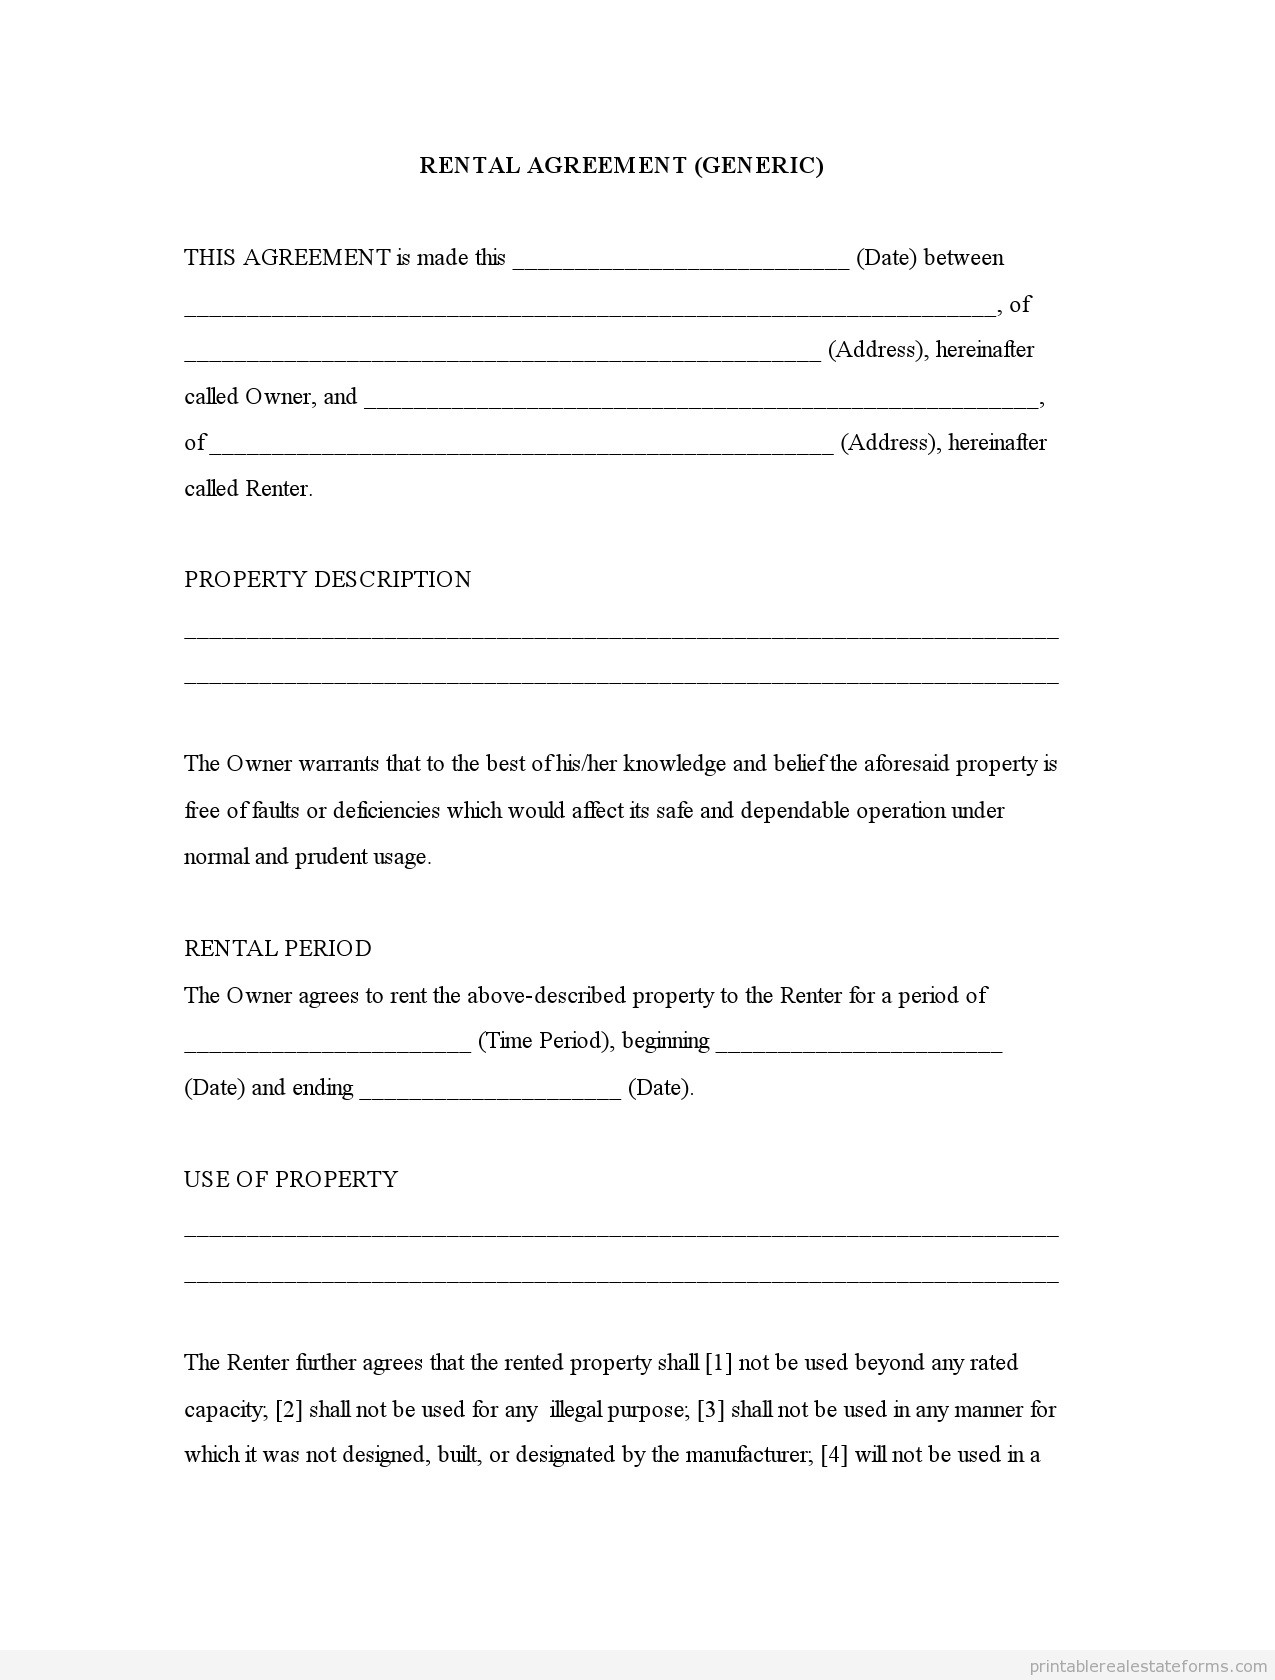 Free Printable Rental Agreement | Rental Agreement (Generic)0001 - Free Printable Lease Agreement Forms